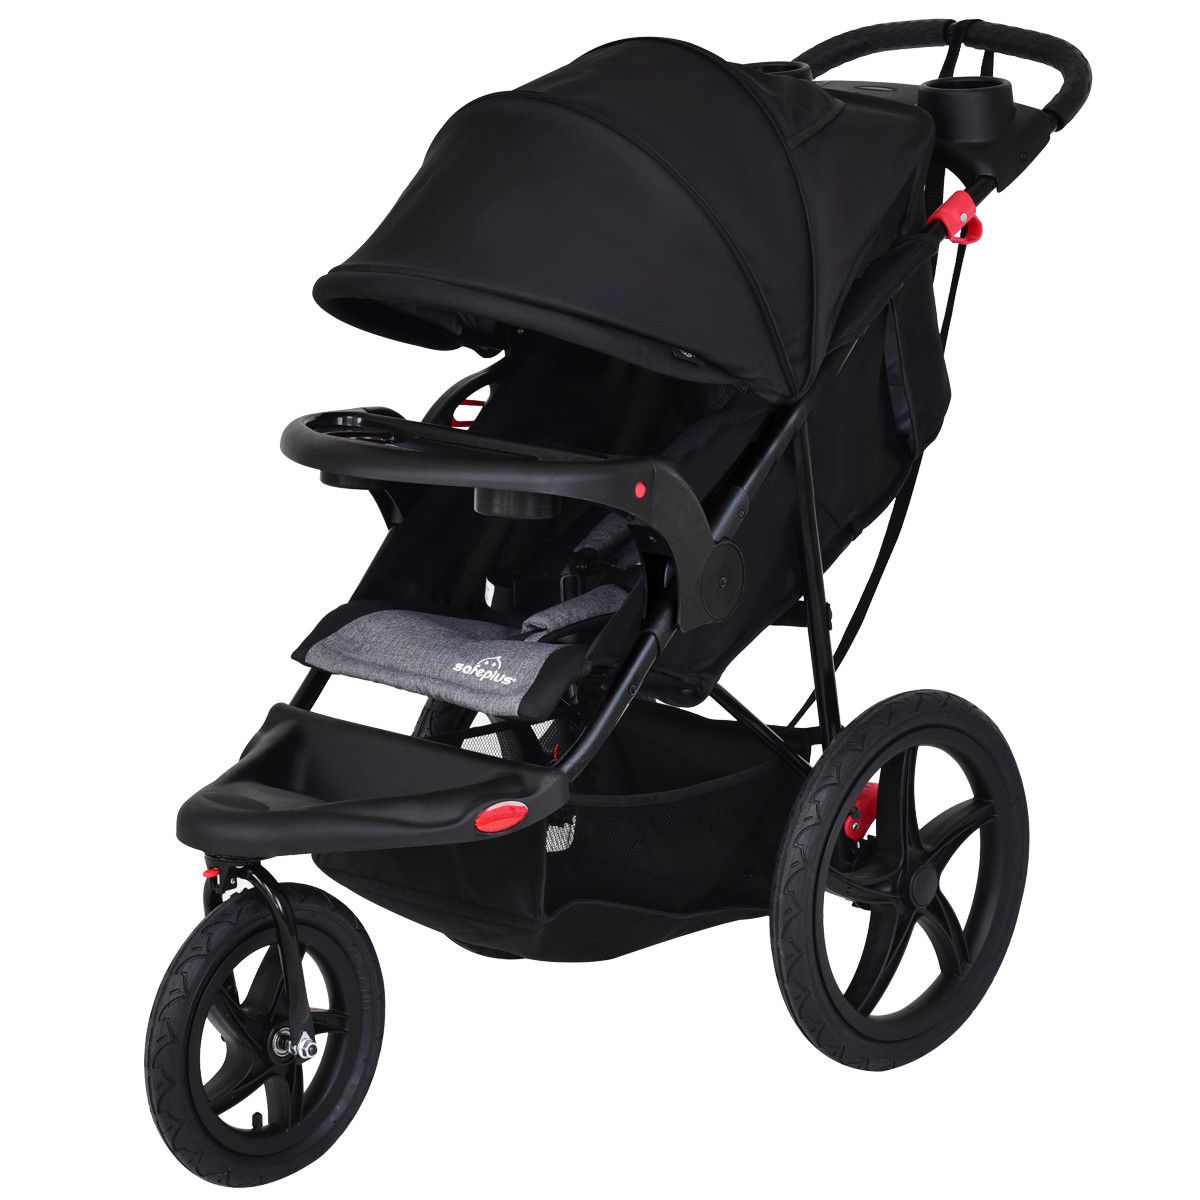 safeplus baby stroller